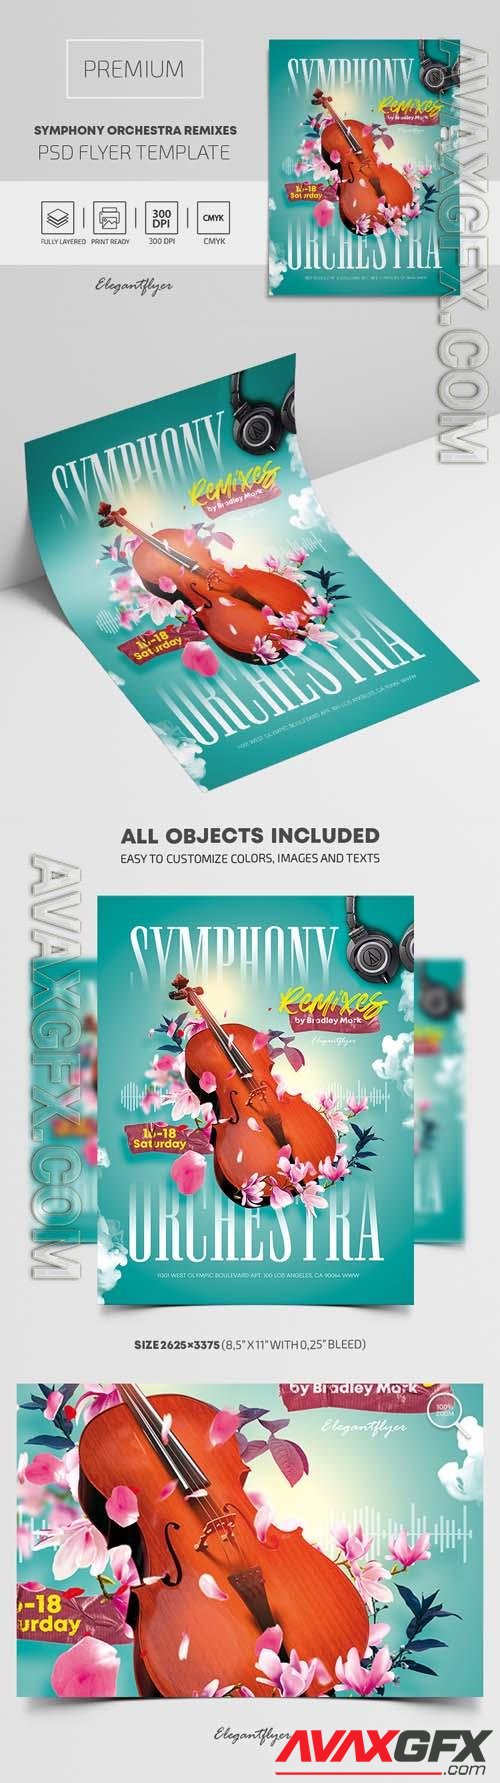 Symphony Orchestra Remixes Premium PSD Flyer Template